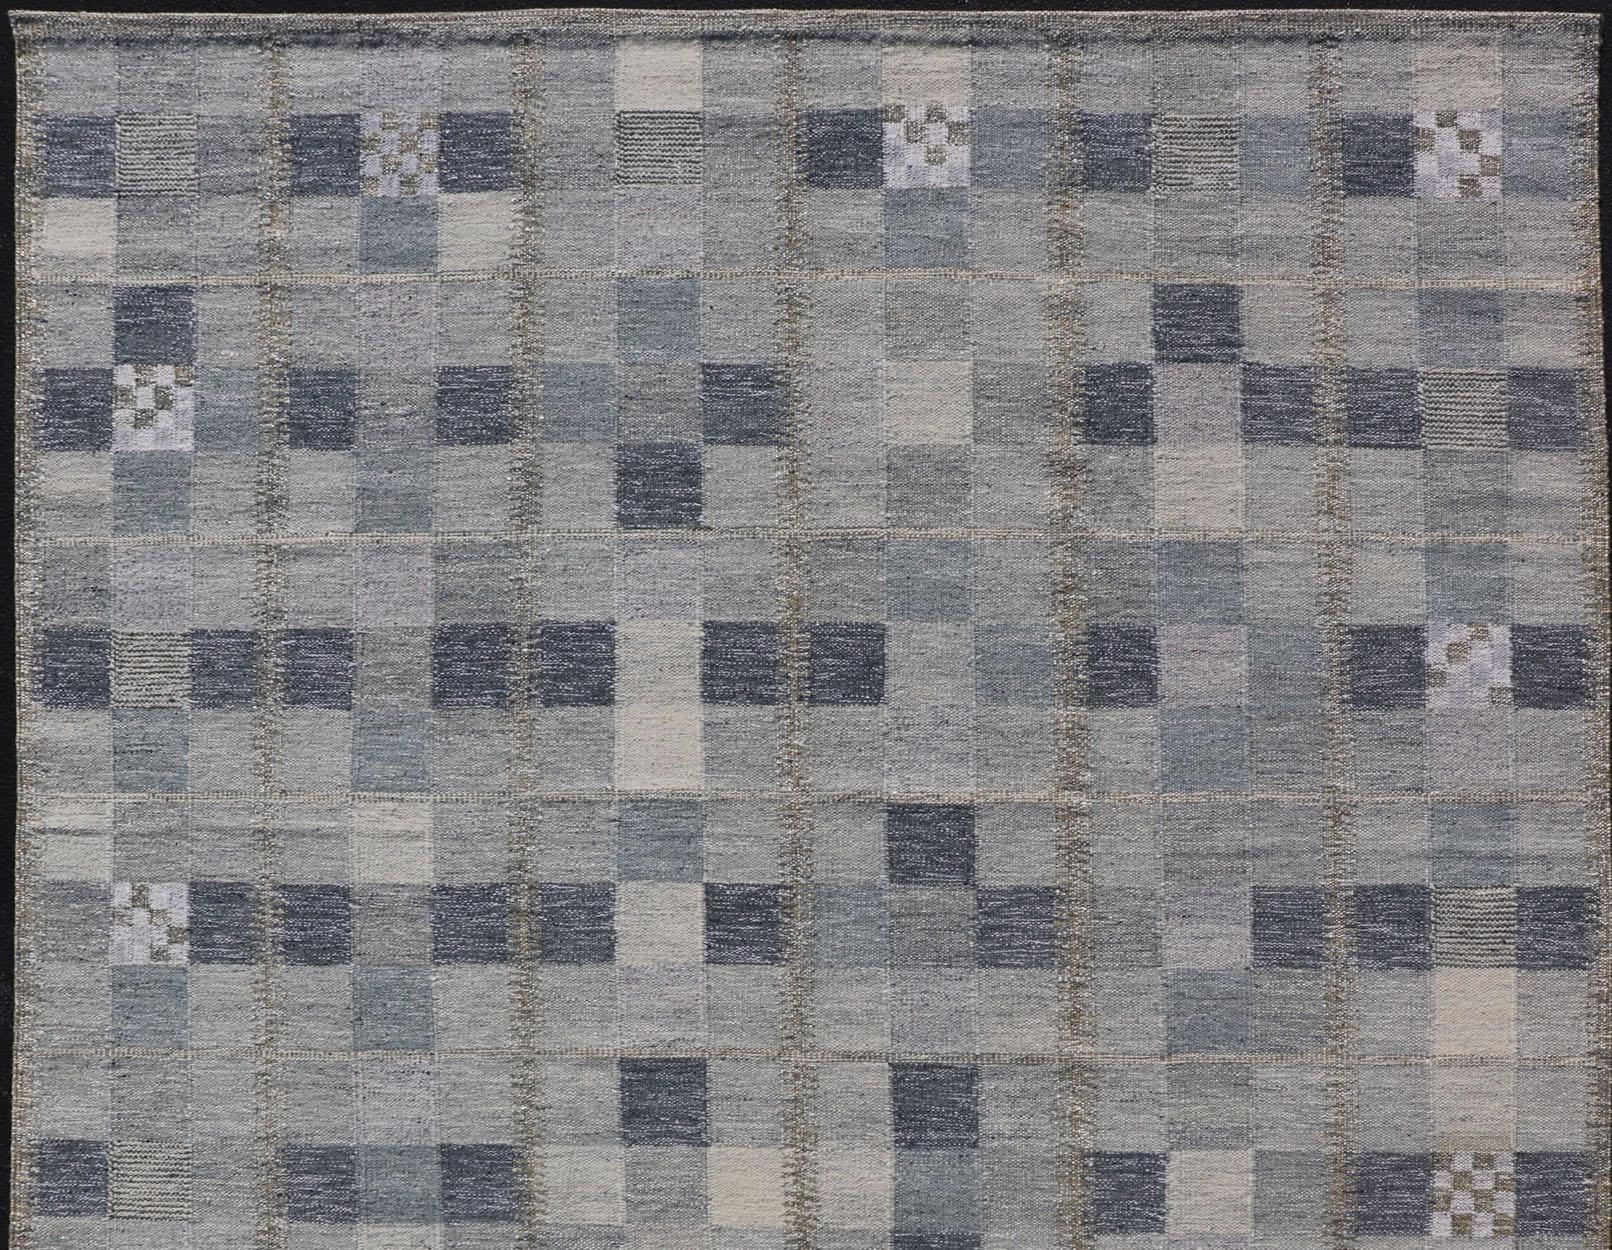 Gray and blue Scandinavian flat-weave design rug with geometric design, Keivan Woven Arts, rug RJK-44522-SHB-137-01, country of origin / type: India / Scandinavian flat-weave.

This Scandinavian flat-weave is inspired by the work of Swedish